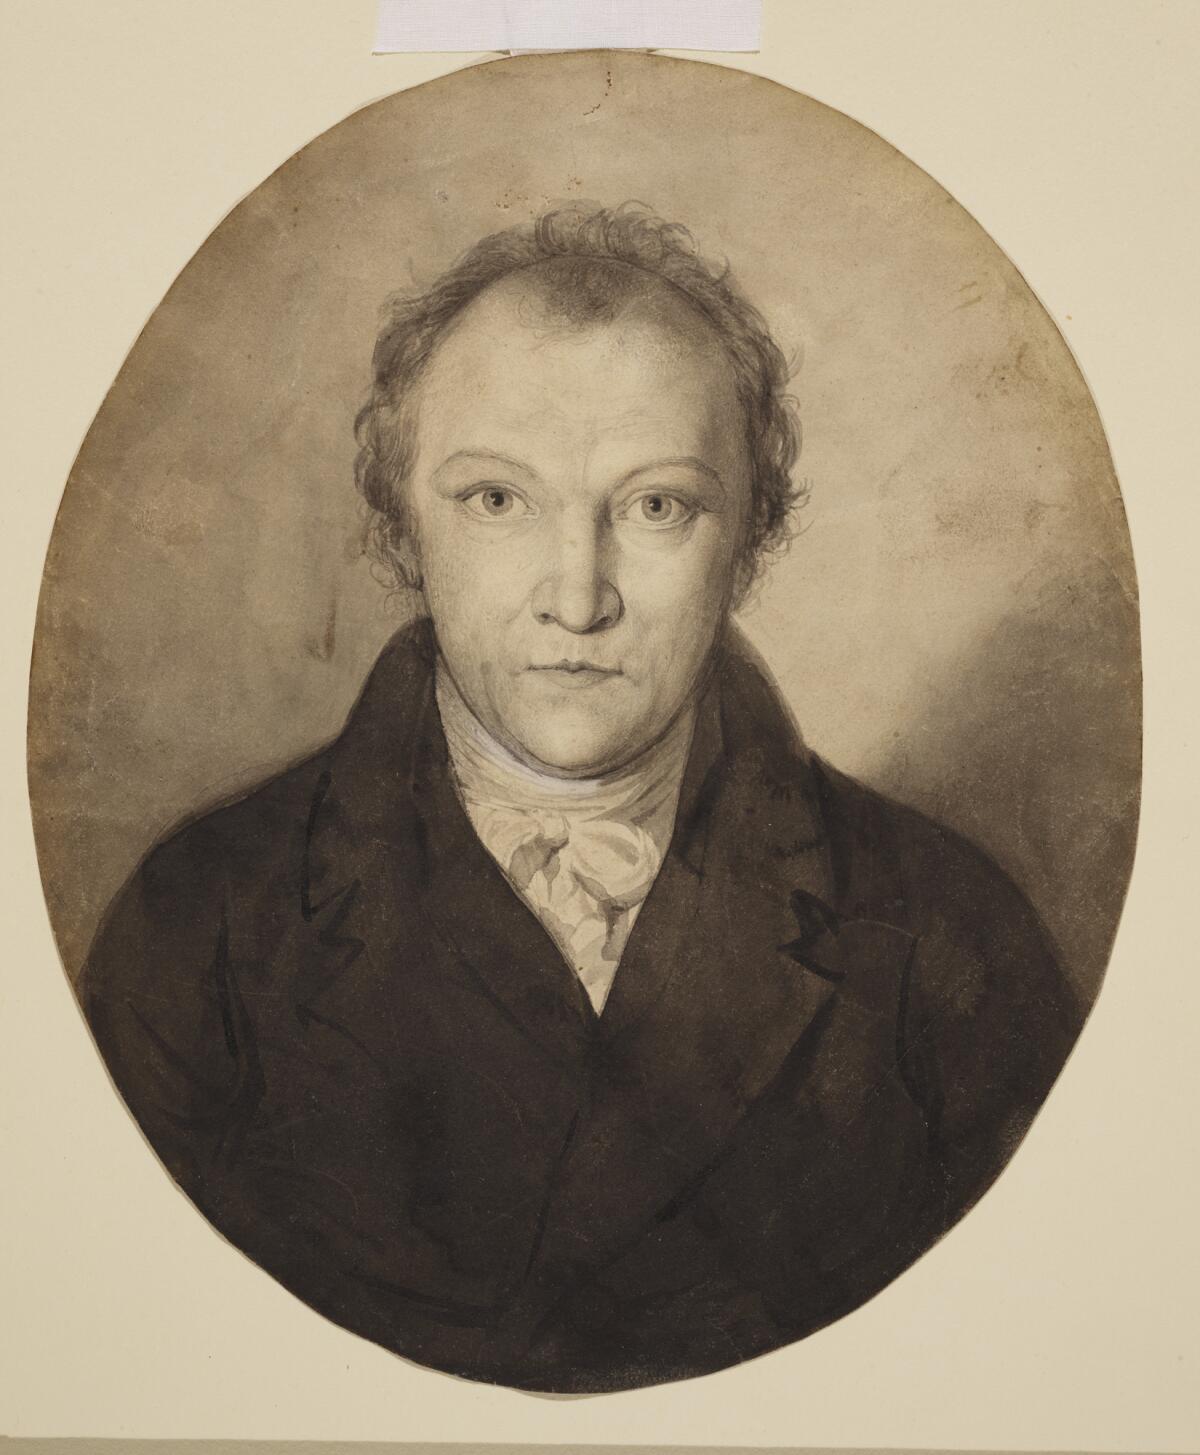 William Blake, "Self-portrait," 1802-04, pencil and gray wash on paper